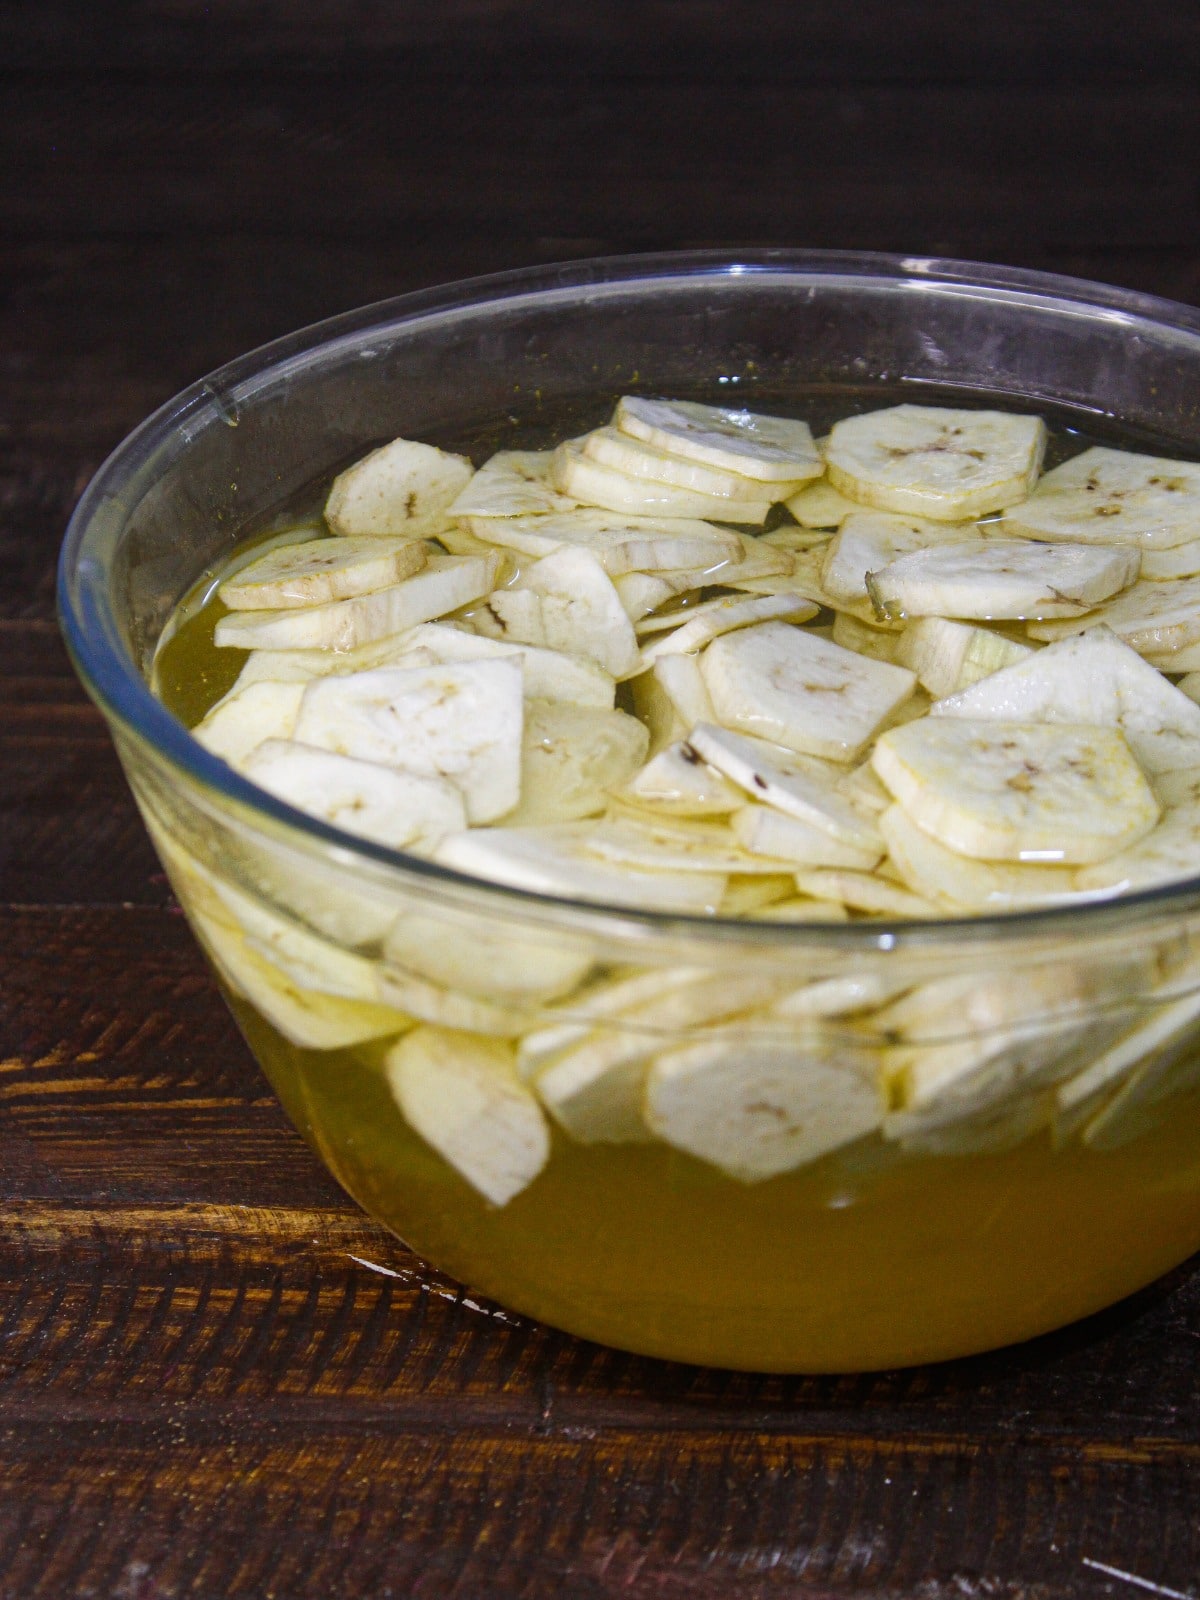 Soak banana slices into the turmeric water